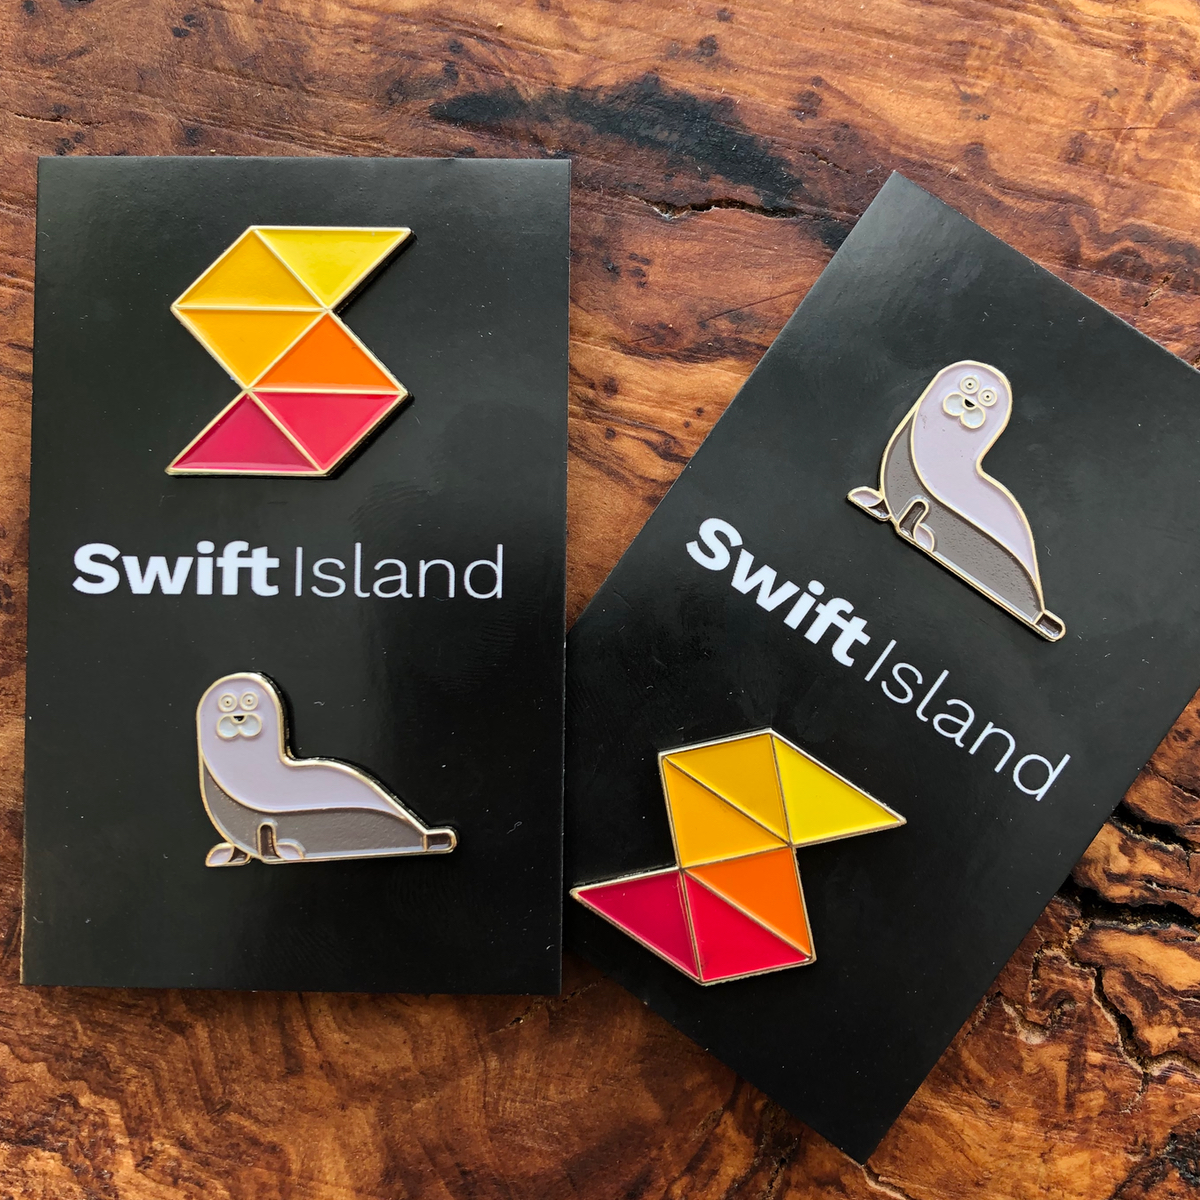 Swift Island Developer Conference